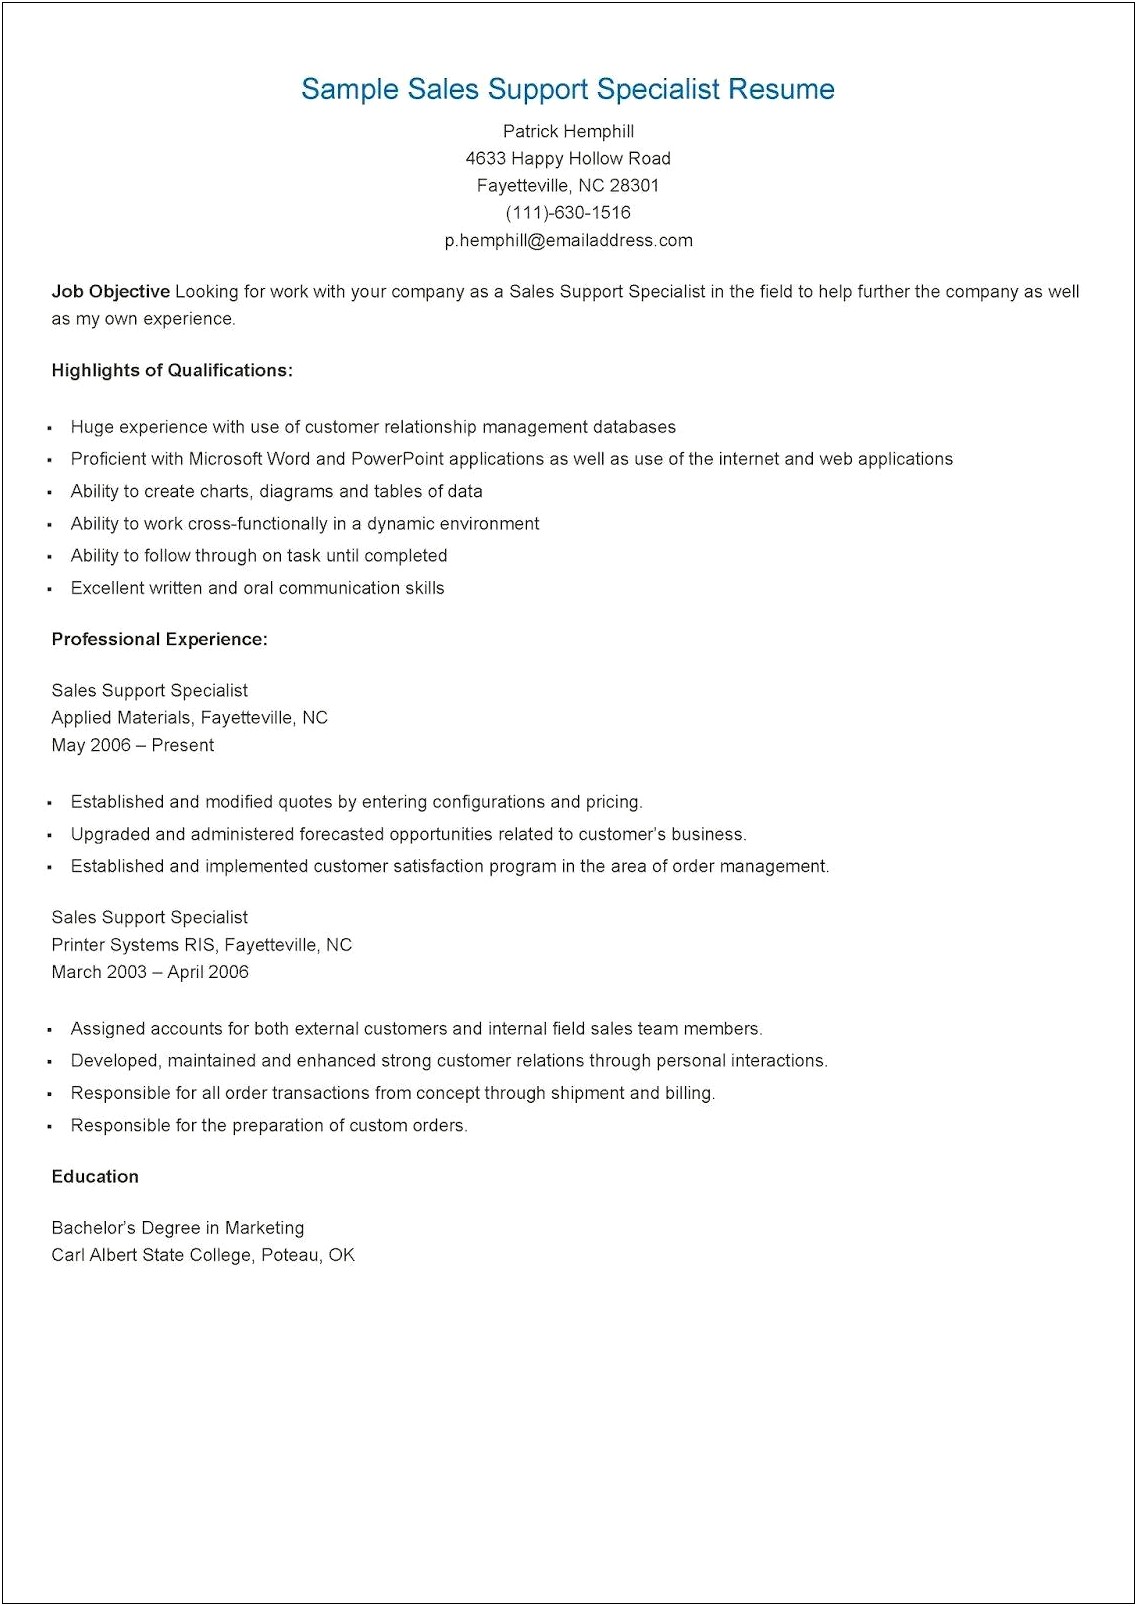 Technical Support Specialist Job Description For Resume